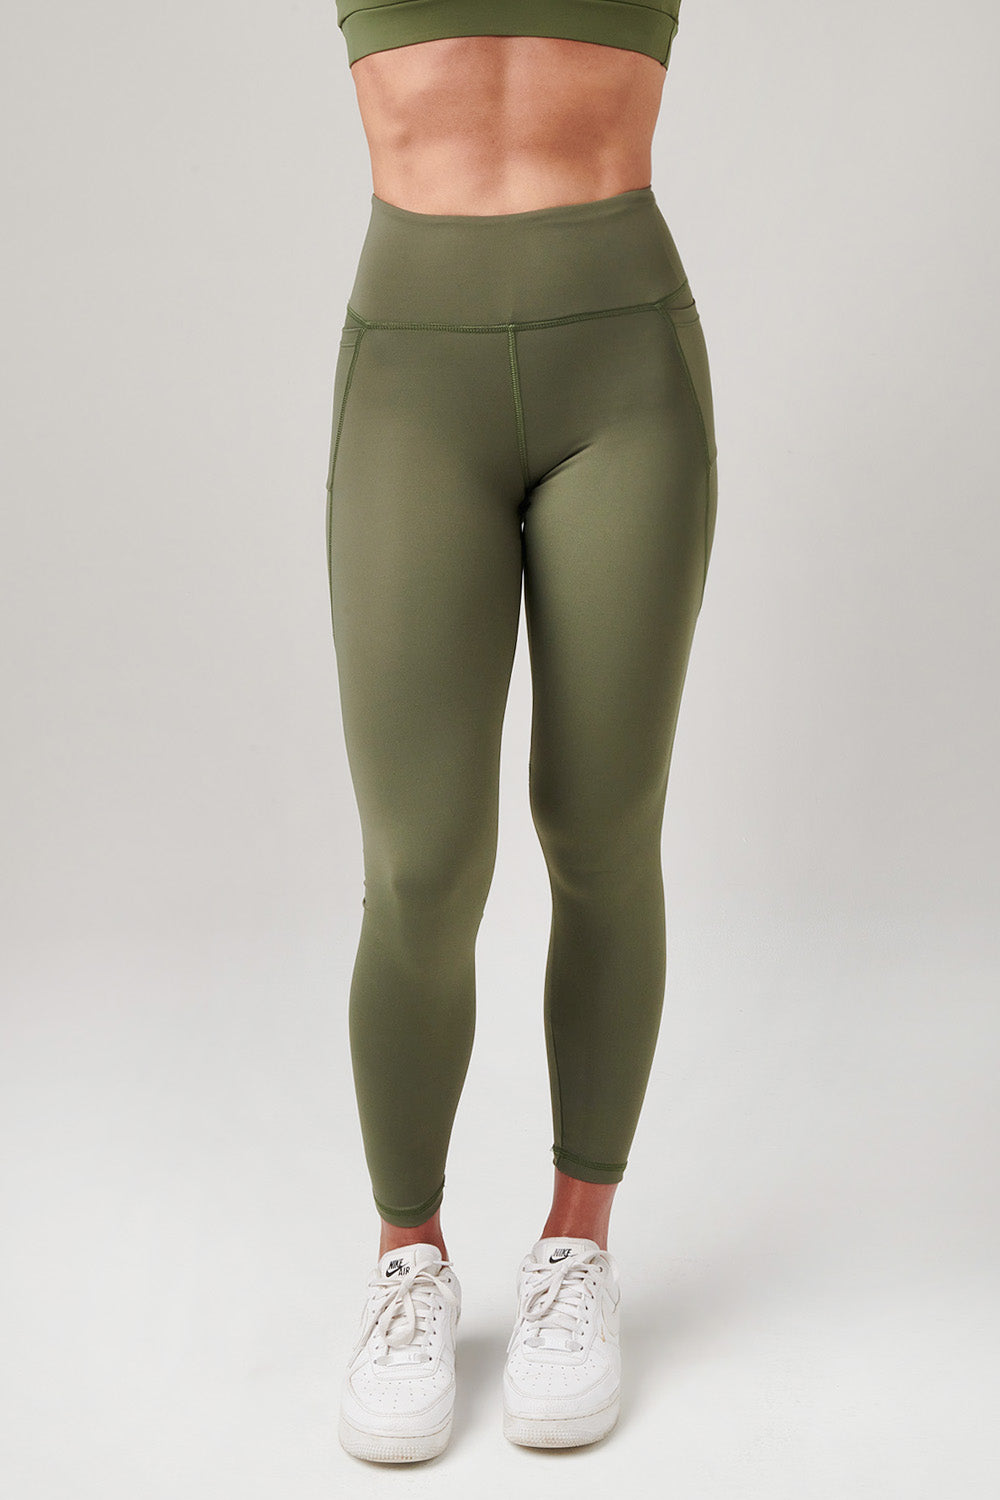 GB Elevate High Waist Leggings - Green – GB Wear UK